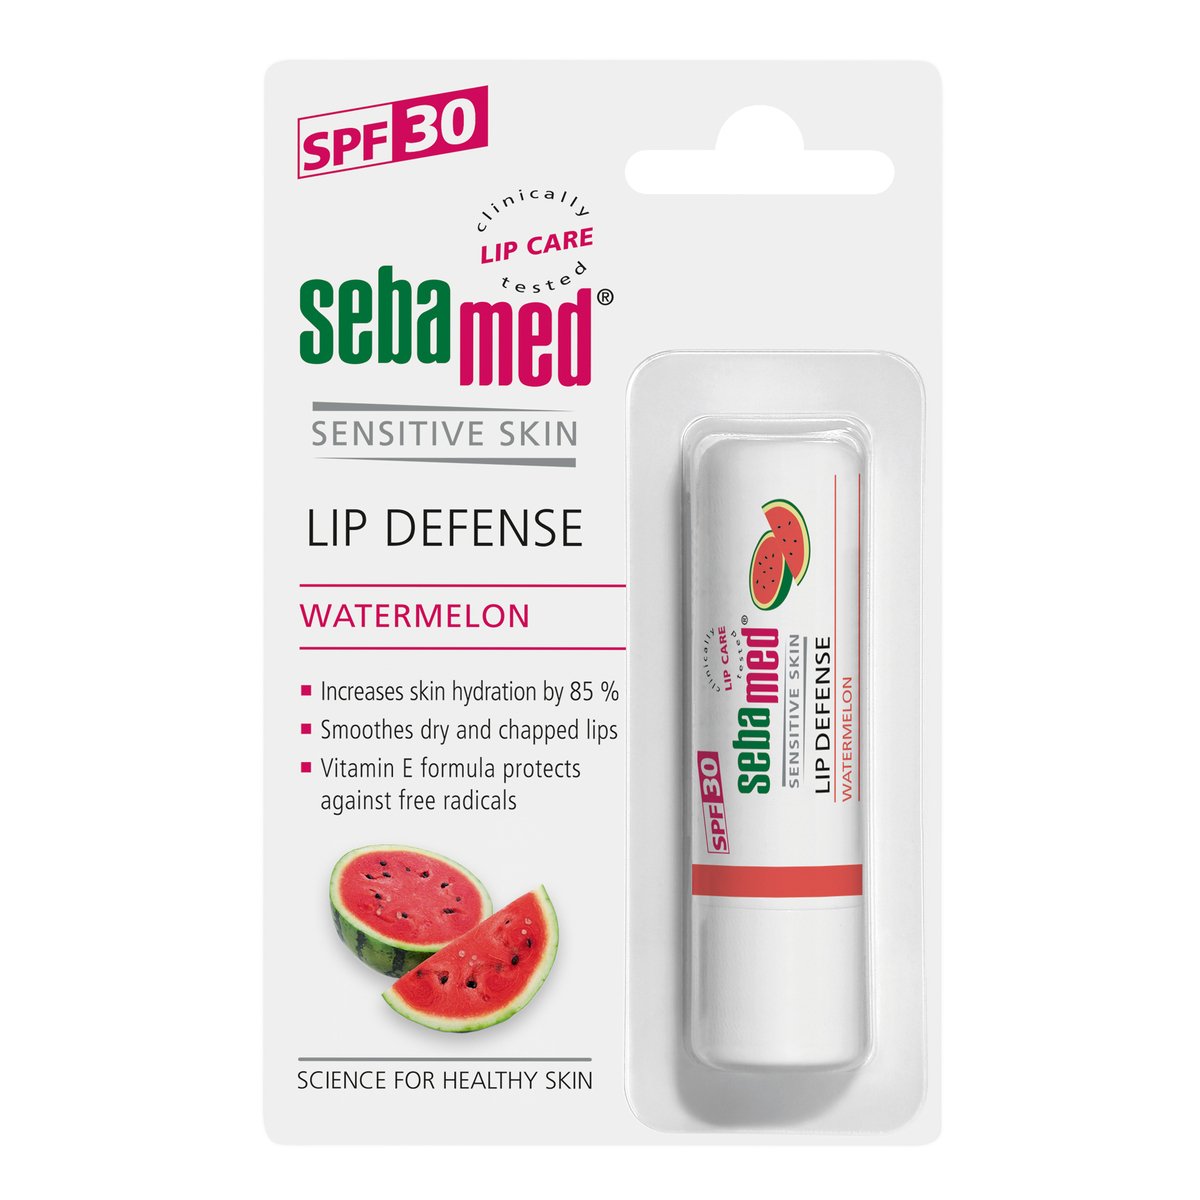 Sebamed Watermelon Lip Defense SPF30 4.8 g